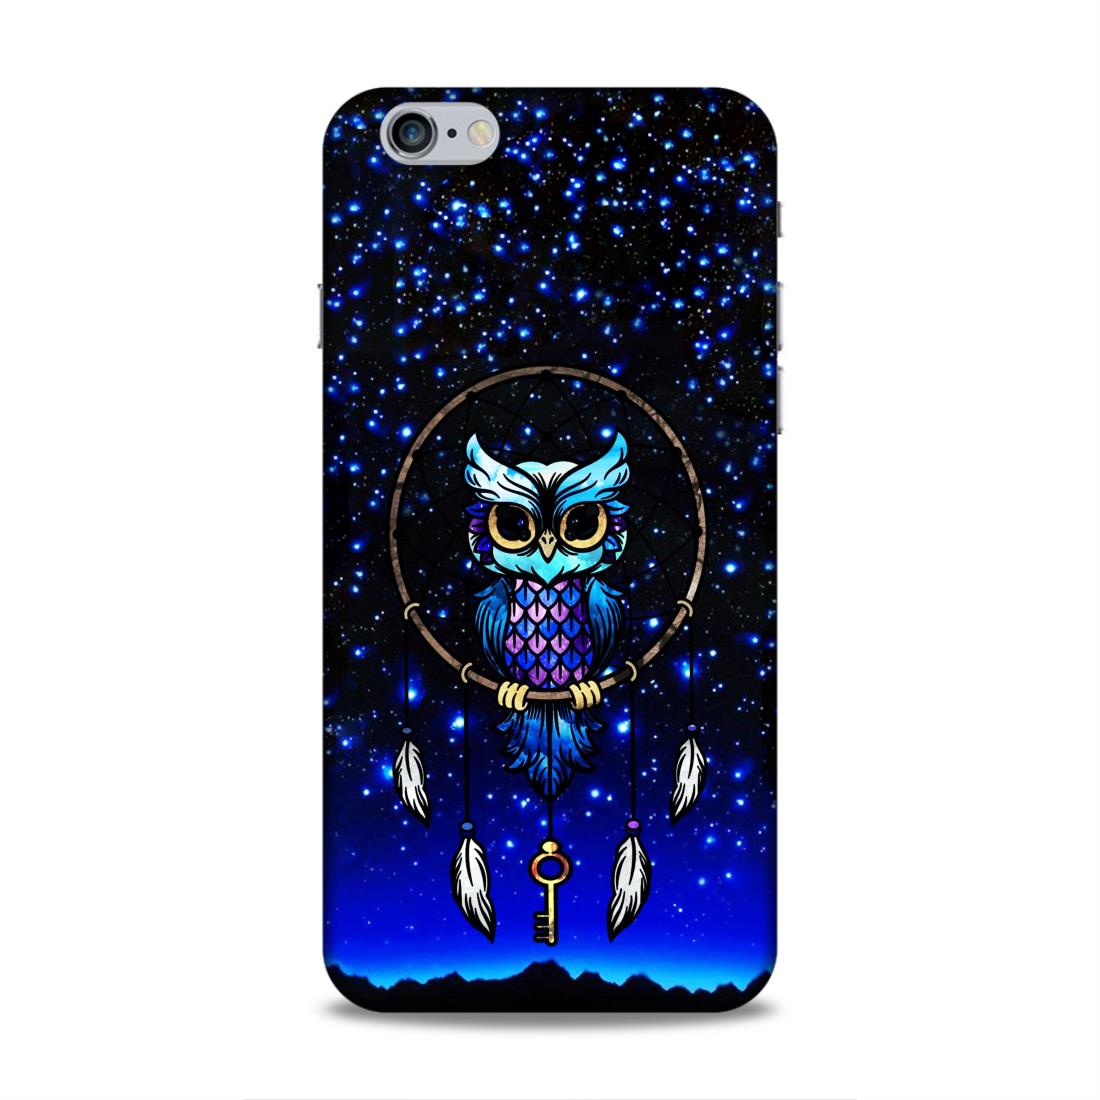 Dreamcatcher Owl Hard Back Case For Apple iPhone 6 Plus / 6s Plus